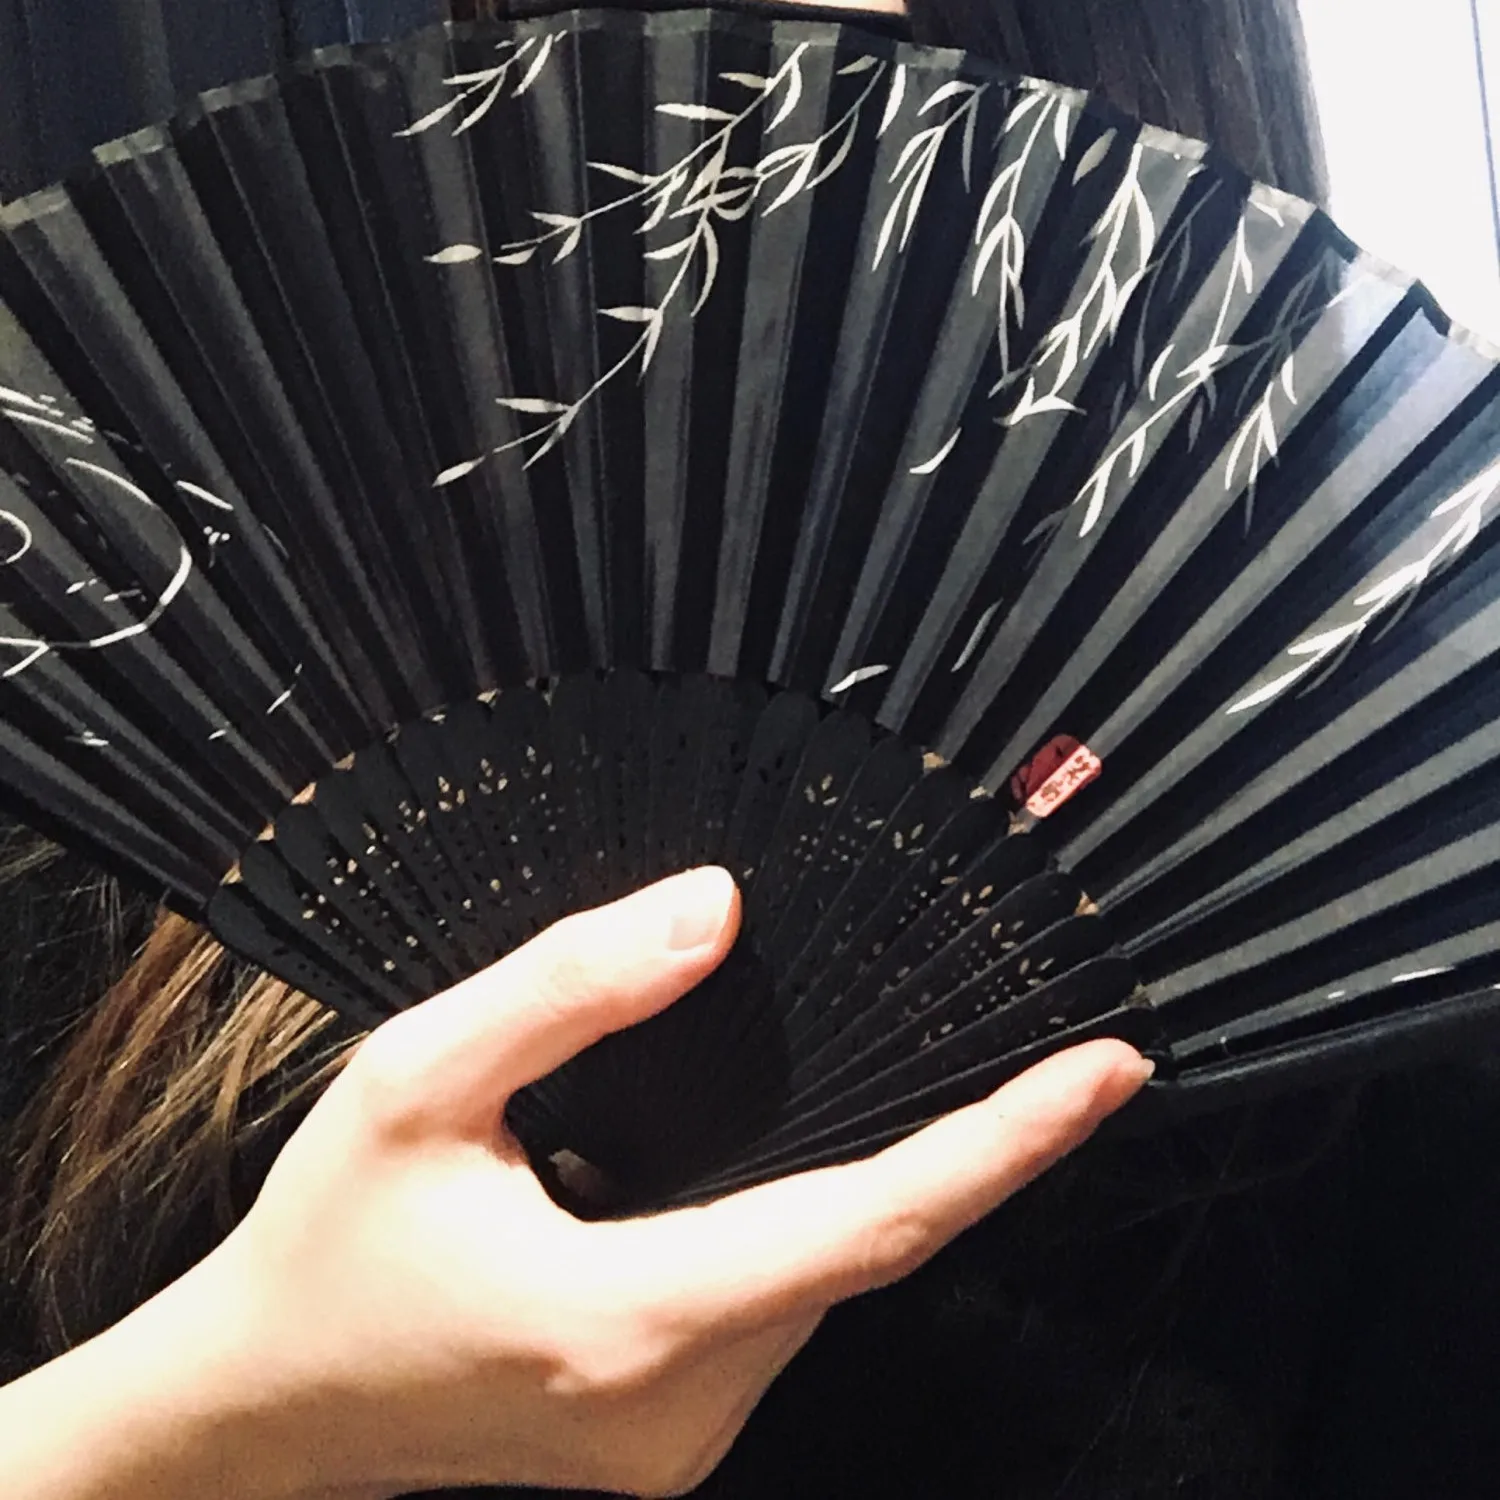 Chinese Japanese Folding Fan Wooden Shank Classical Dance Fan  High Quality Tassel  Elegent Female Fan Martial Arts Style Gifts